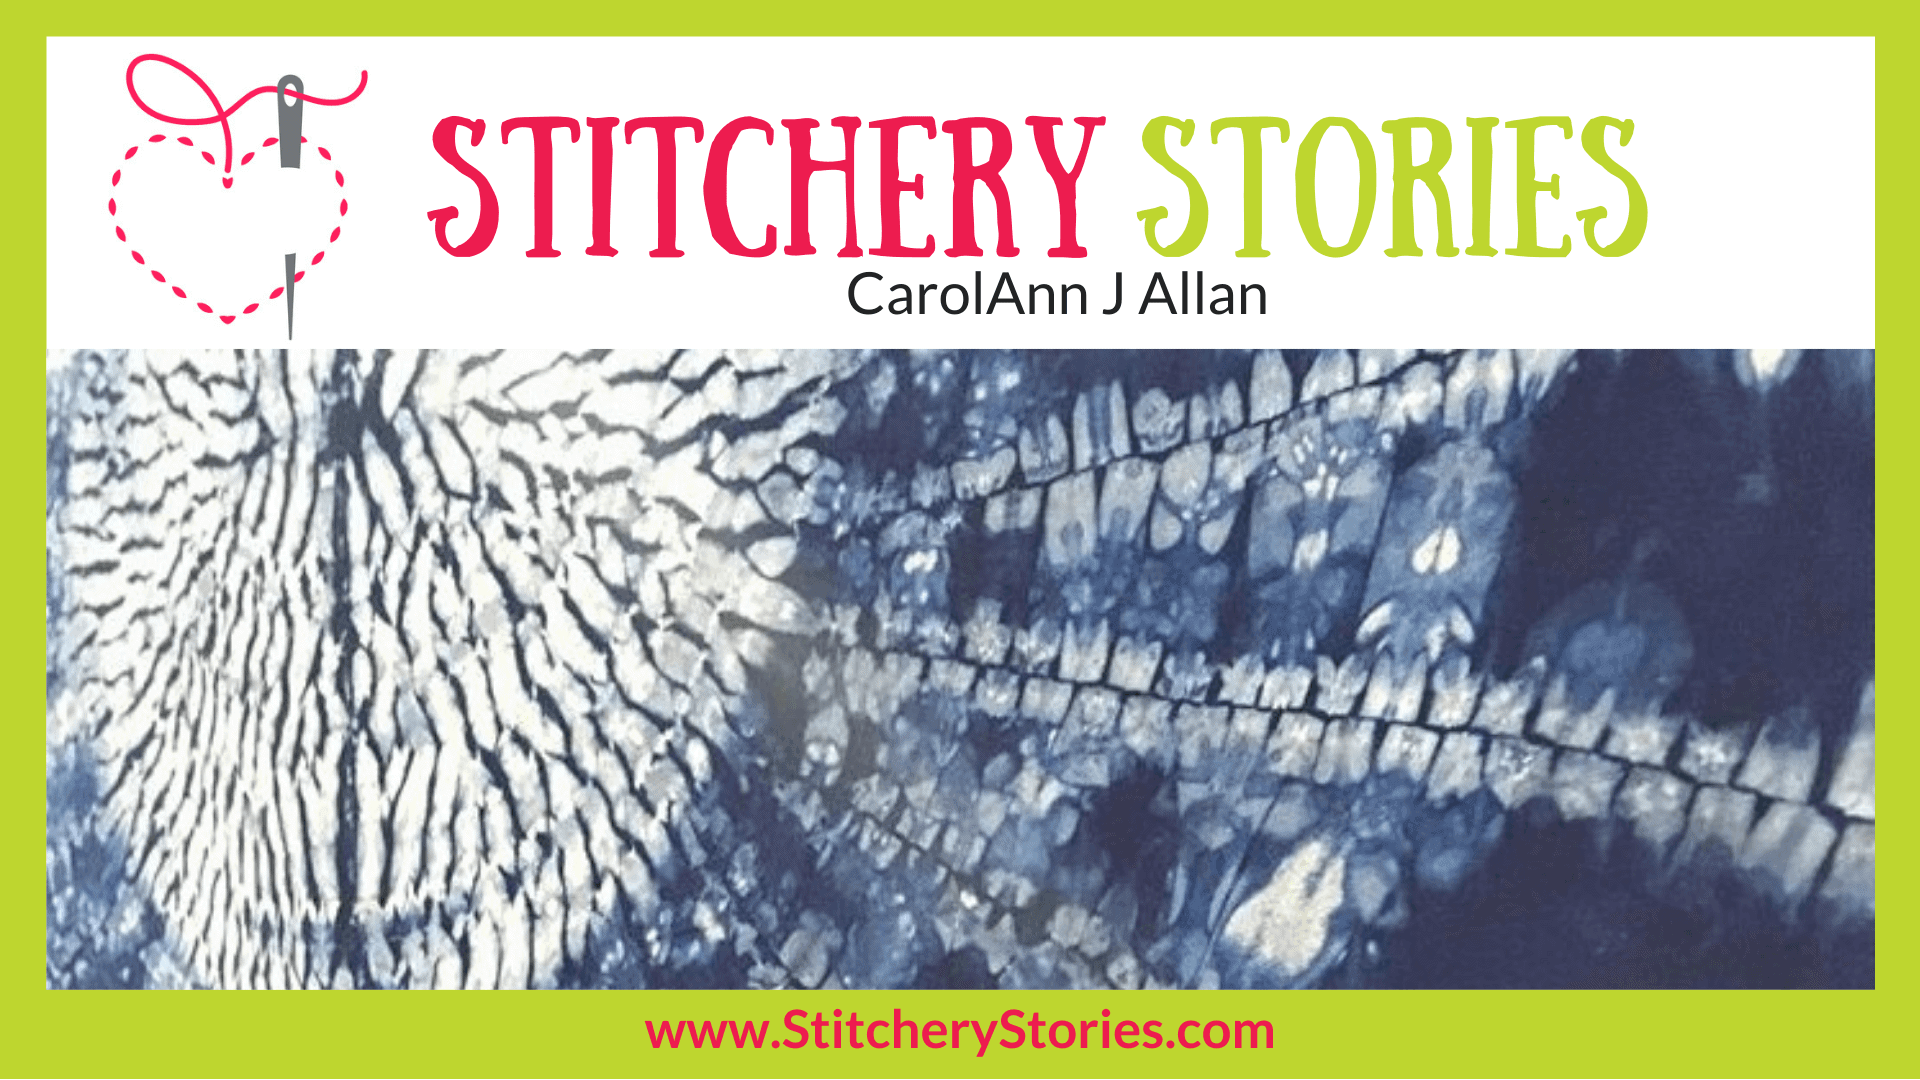 CarolAnn J Allan guest Stitchery Stories textile art podcast Wide Art